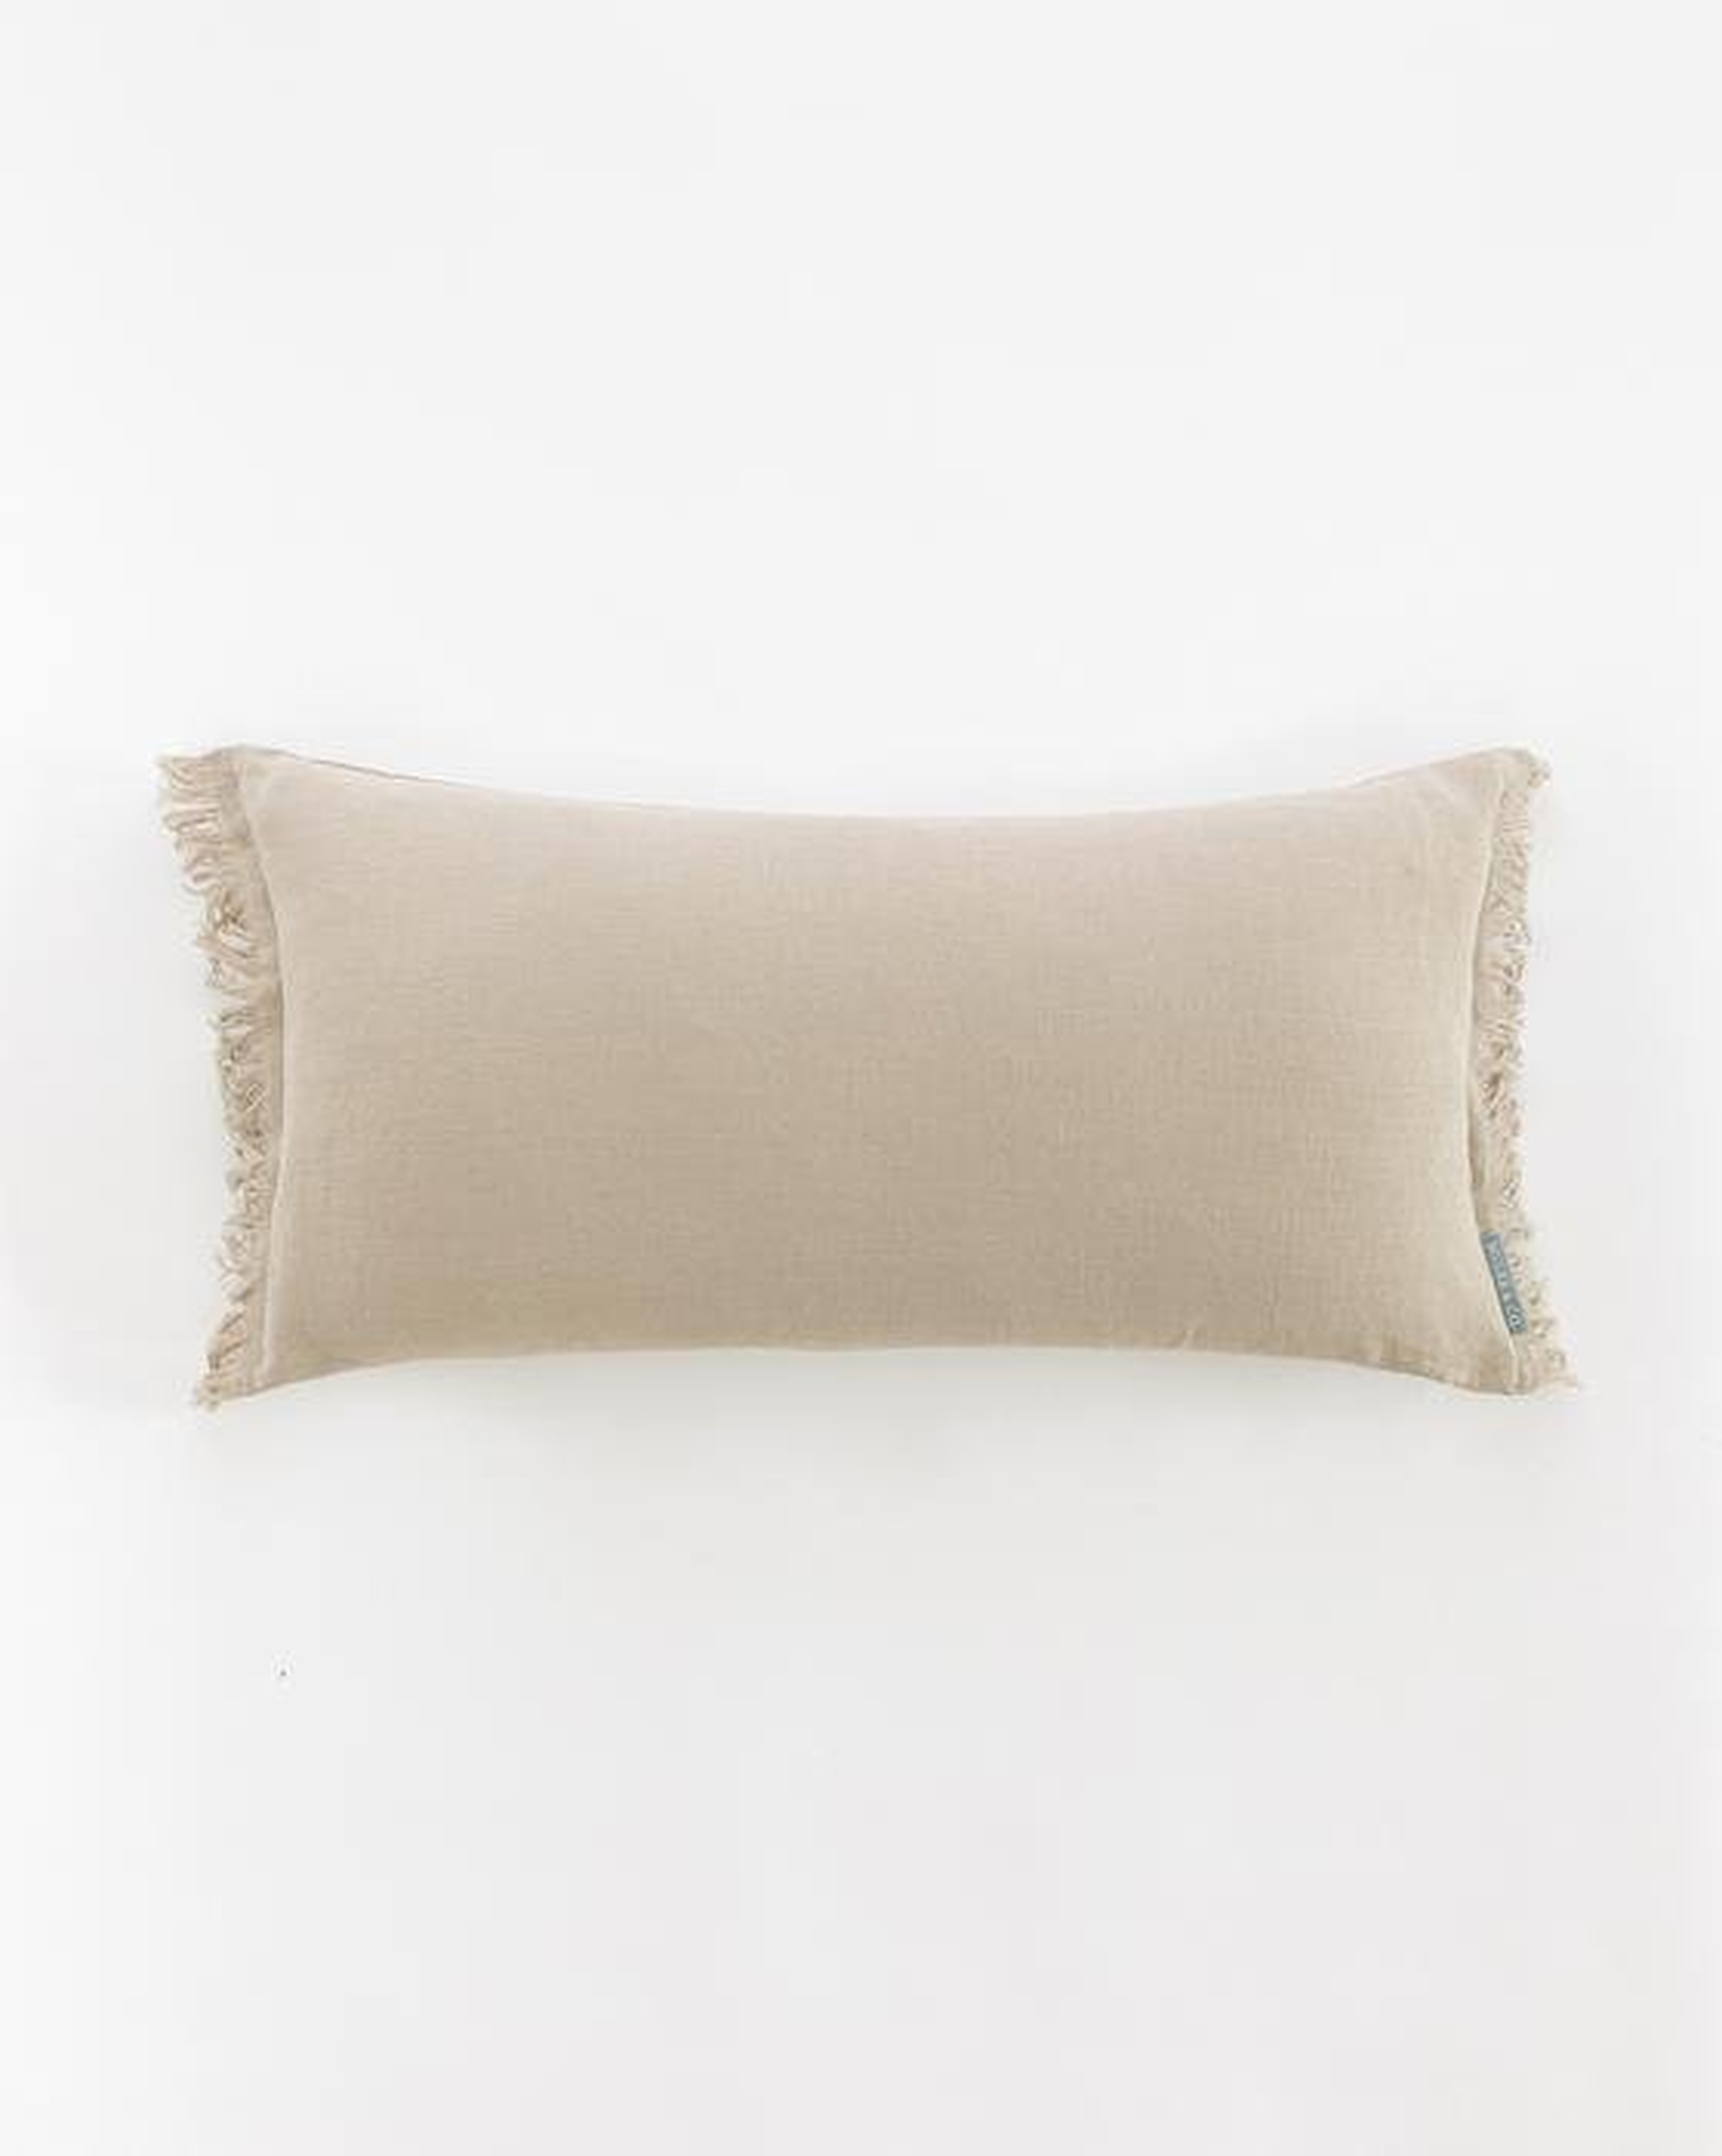 Hazelton Fringed Pillow Cover, Mushroom, 24" x 12" - McGee & Co.